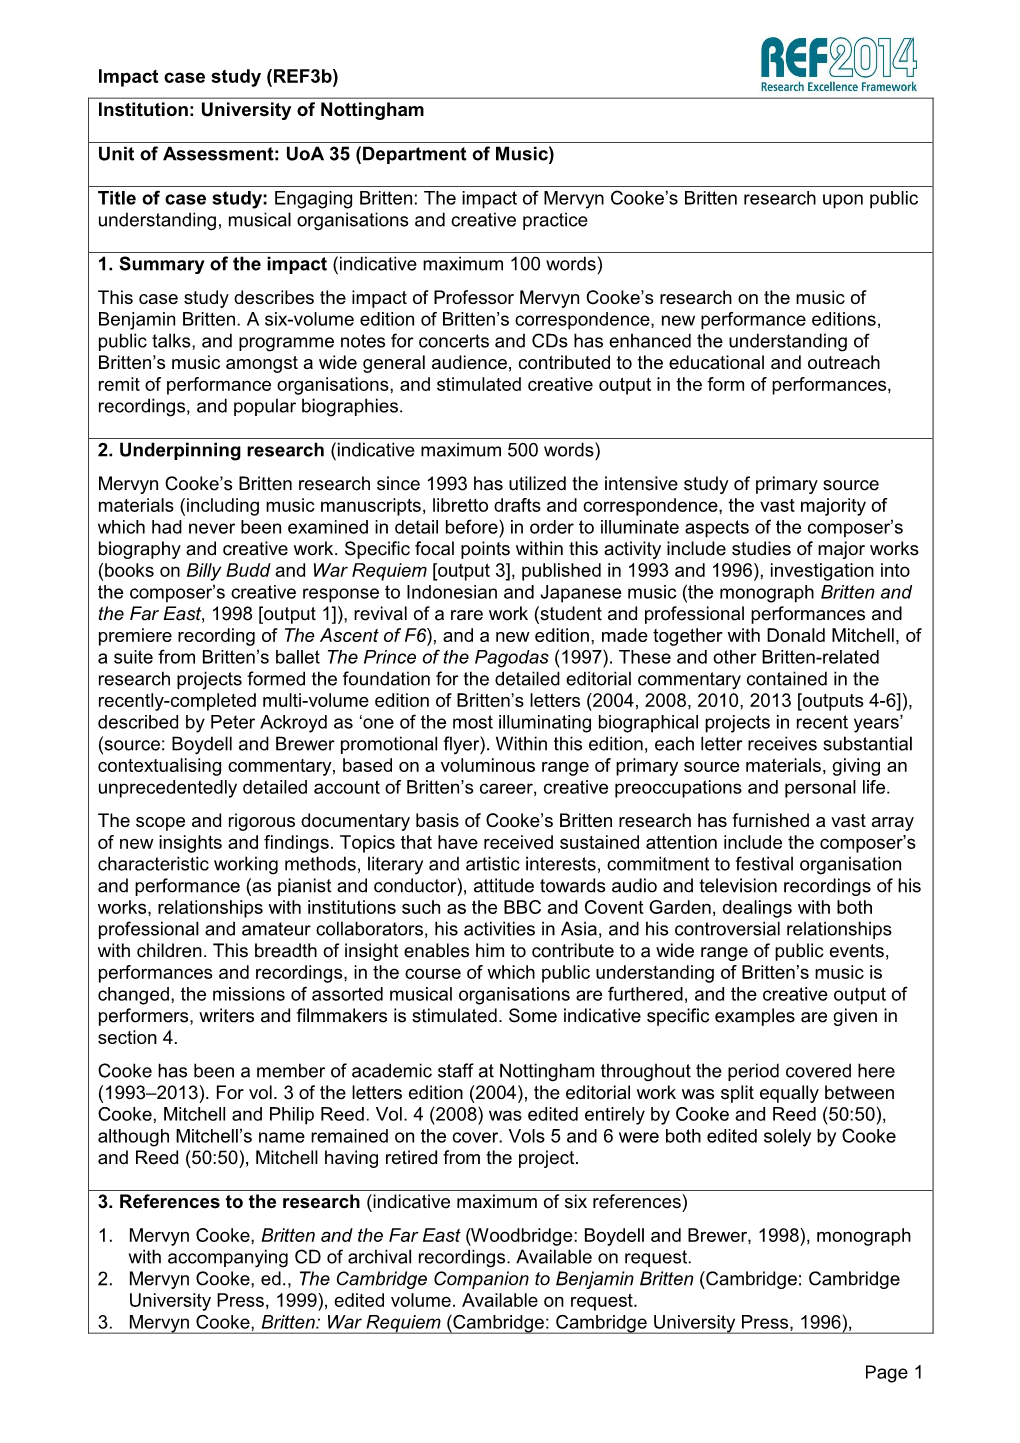 Impact Case Study (Ref3b) Institution: University of Nottingham